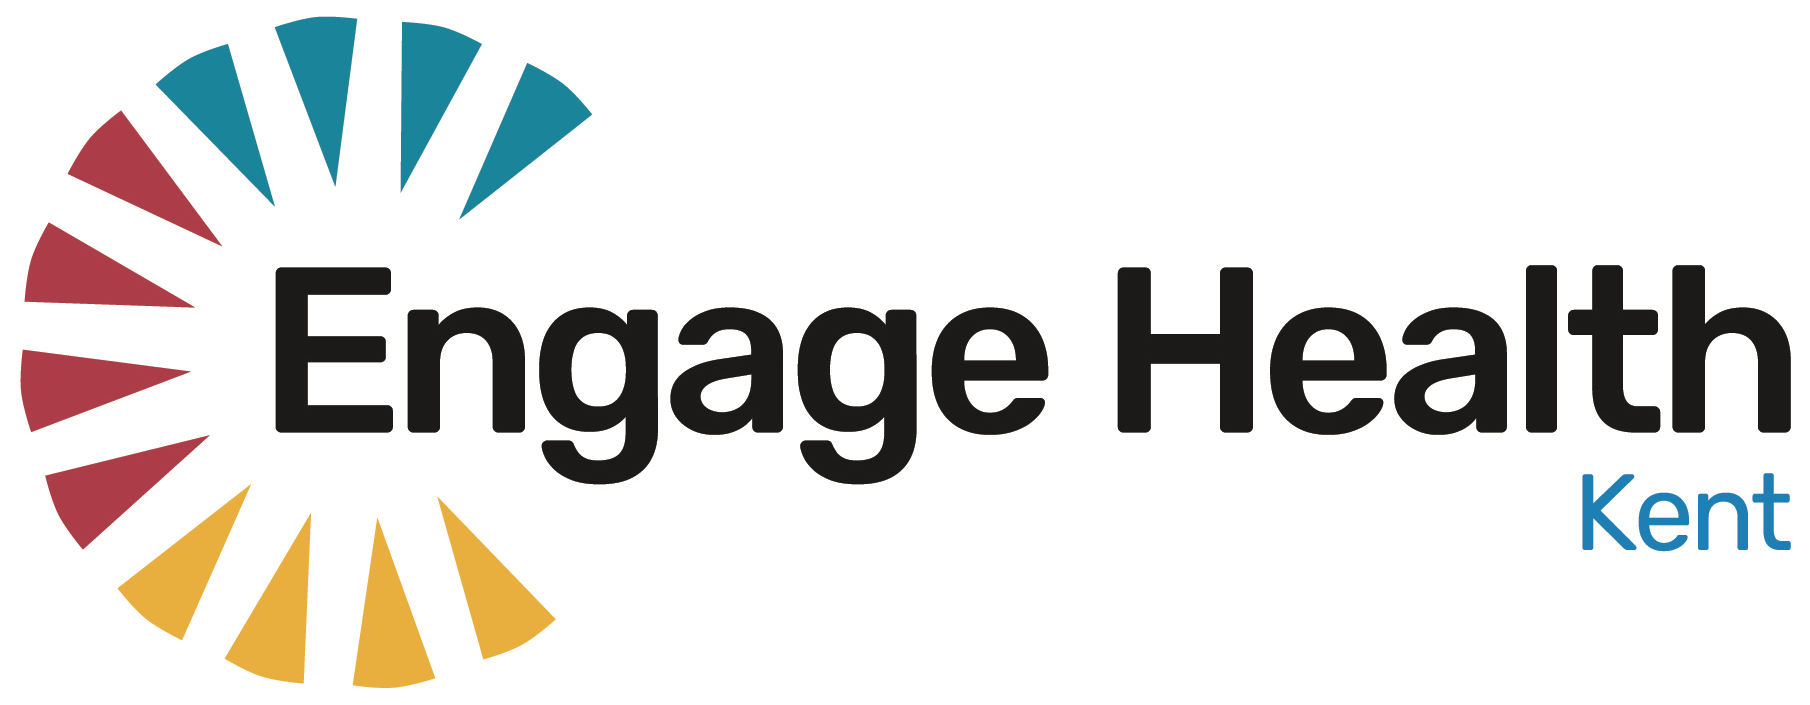 EngageHealth Kent logo